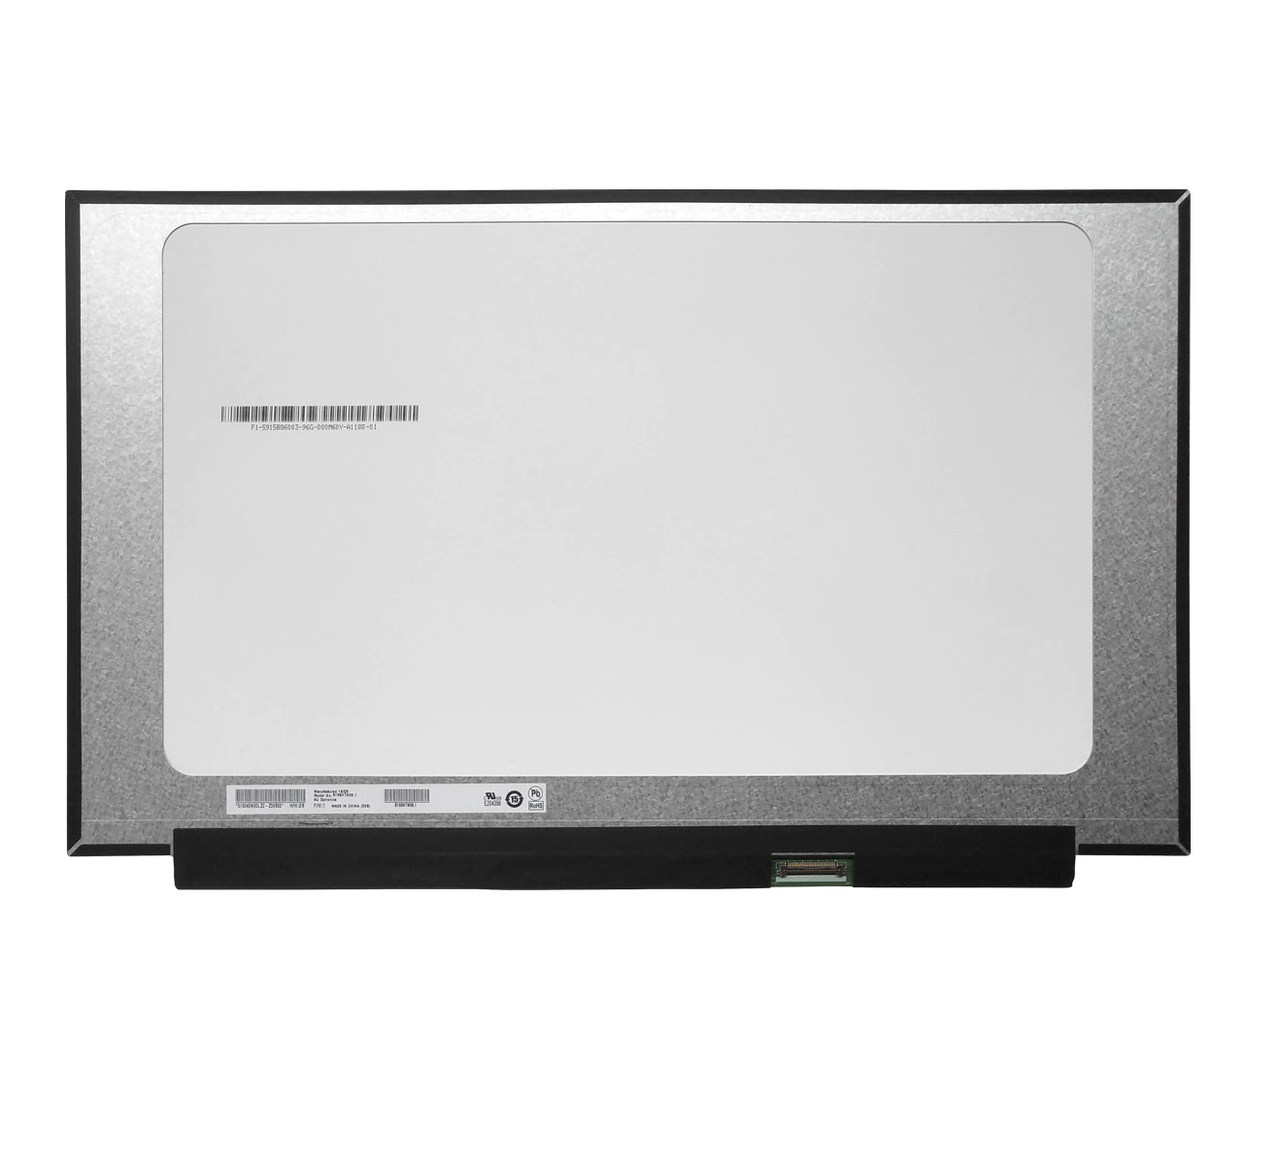 Матрица (экран) для ноутбука Sharp LQ156M1JW08, 15,6 40 eDp Slim, 1920x1080, IPS, 240Hz